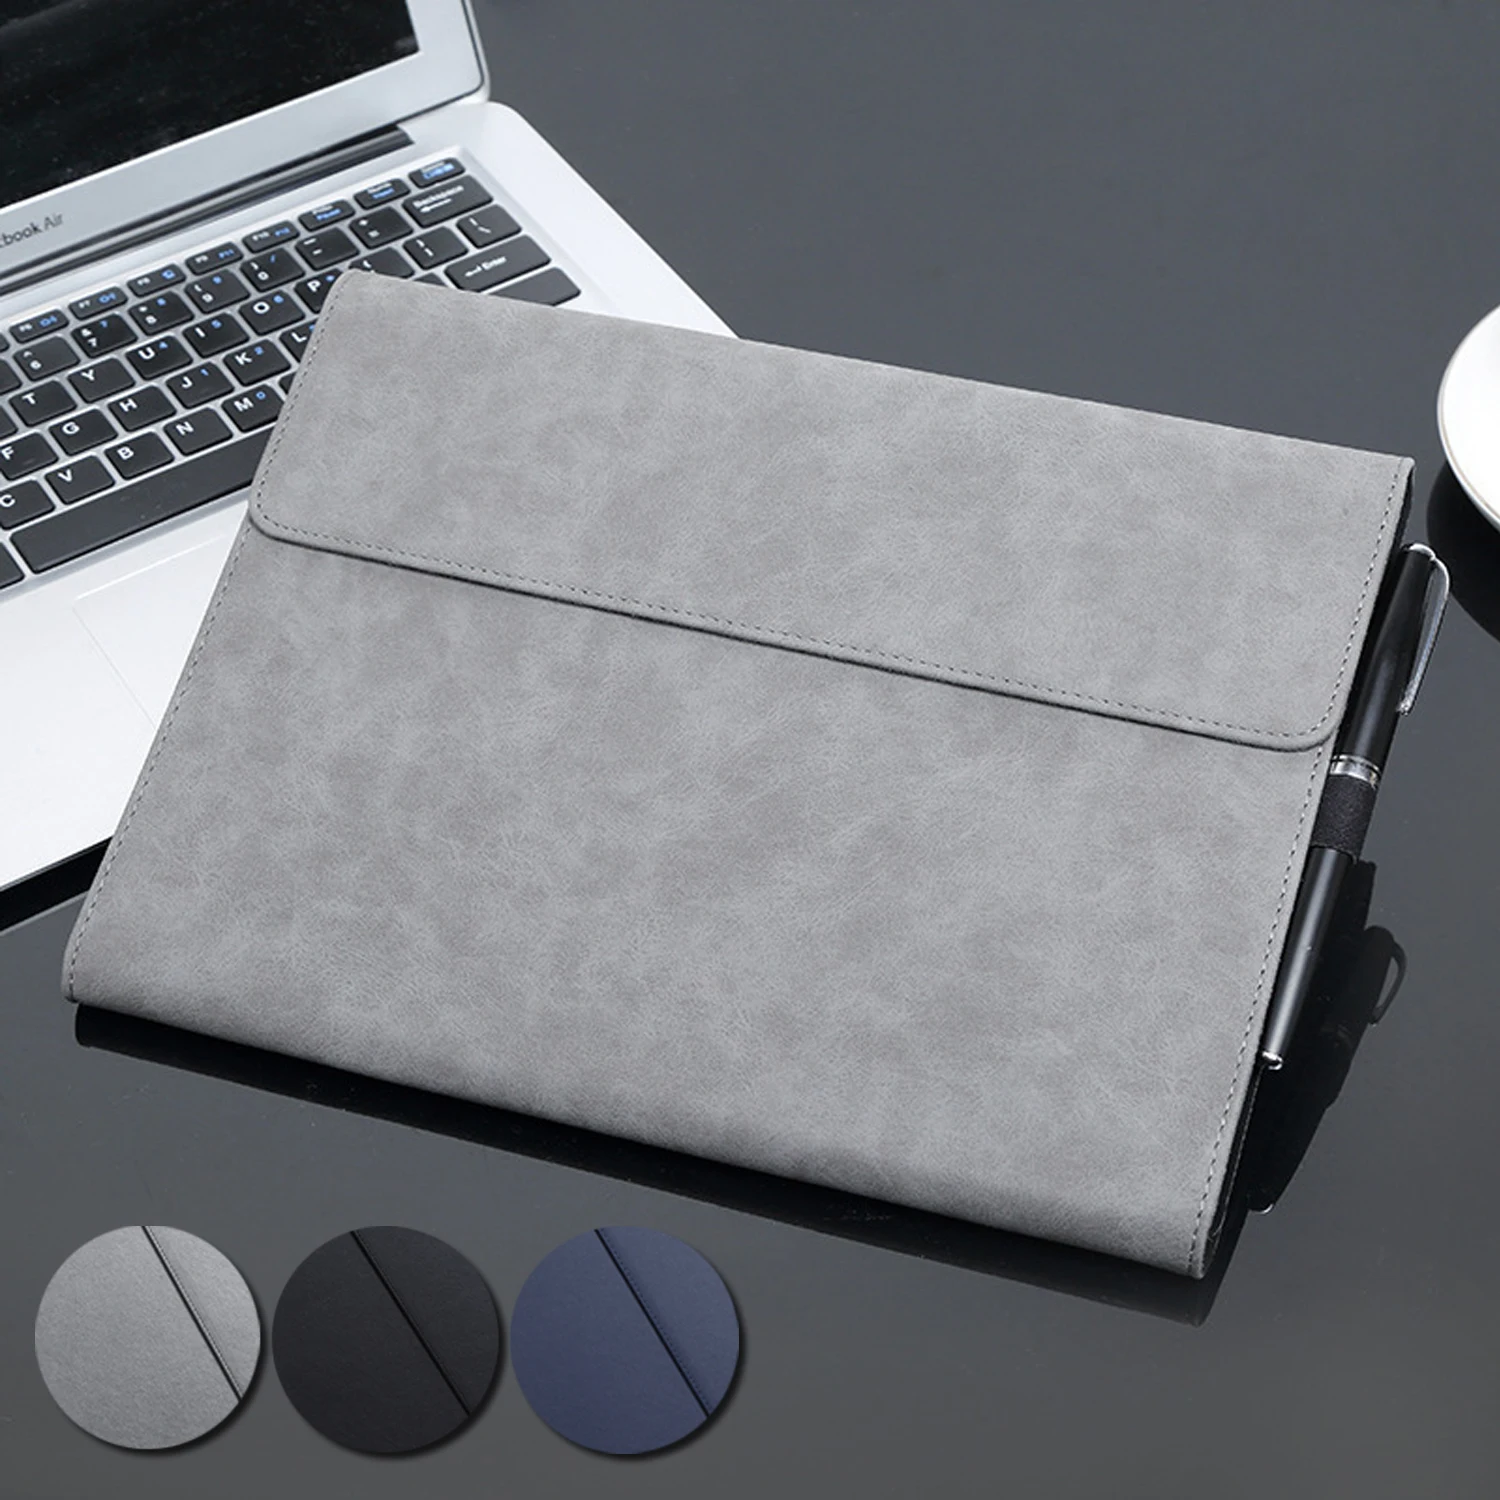 Besegad пленка для клавиатуры из ТПУ Защитная тонкая прозрачная защитная пленка для ноутбука microsoft Surface Pro 3 4 Pro3 Pro4 Go